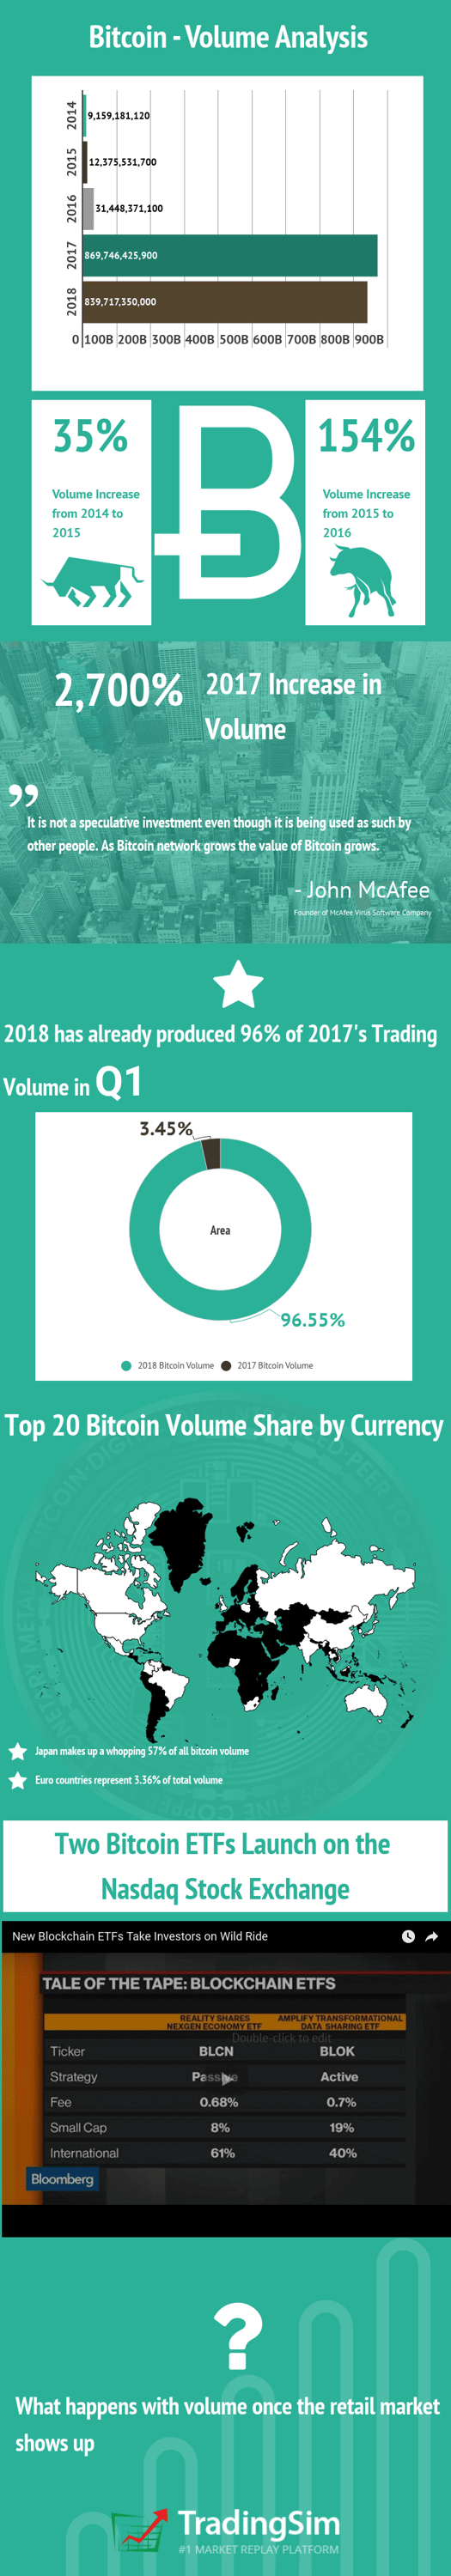 Bitcoin volume analysis infographic